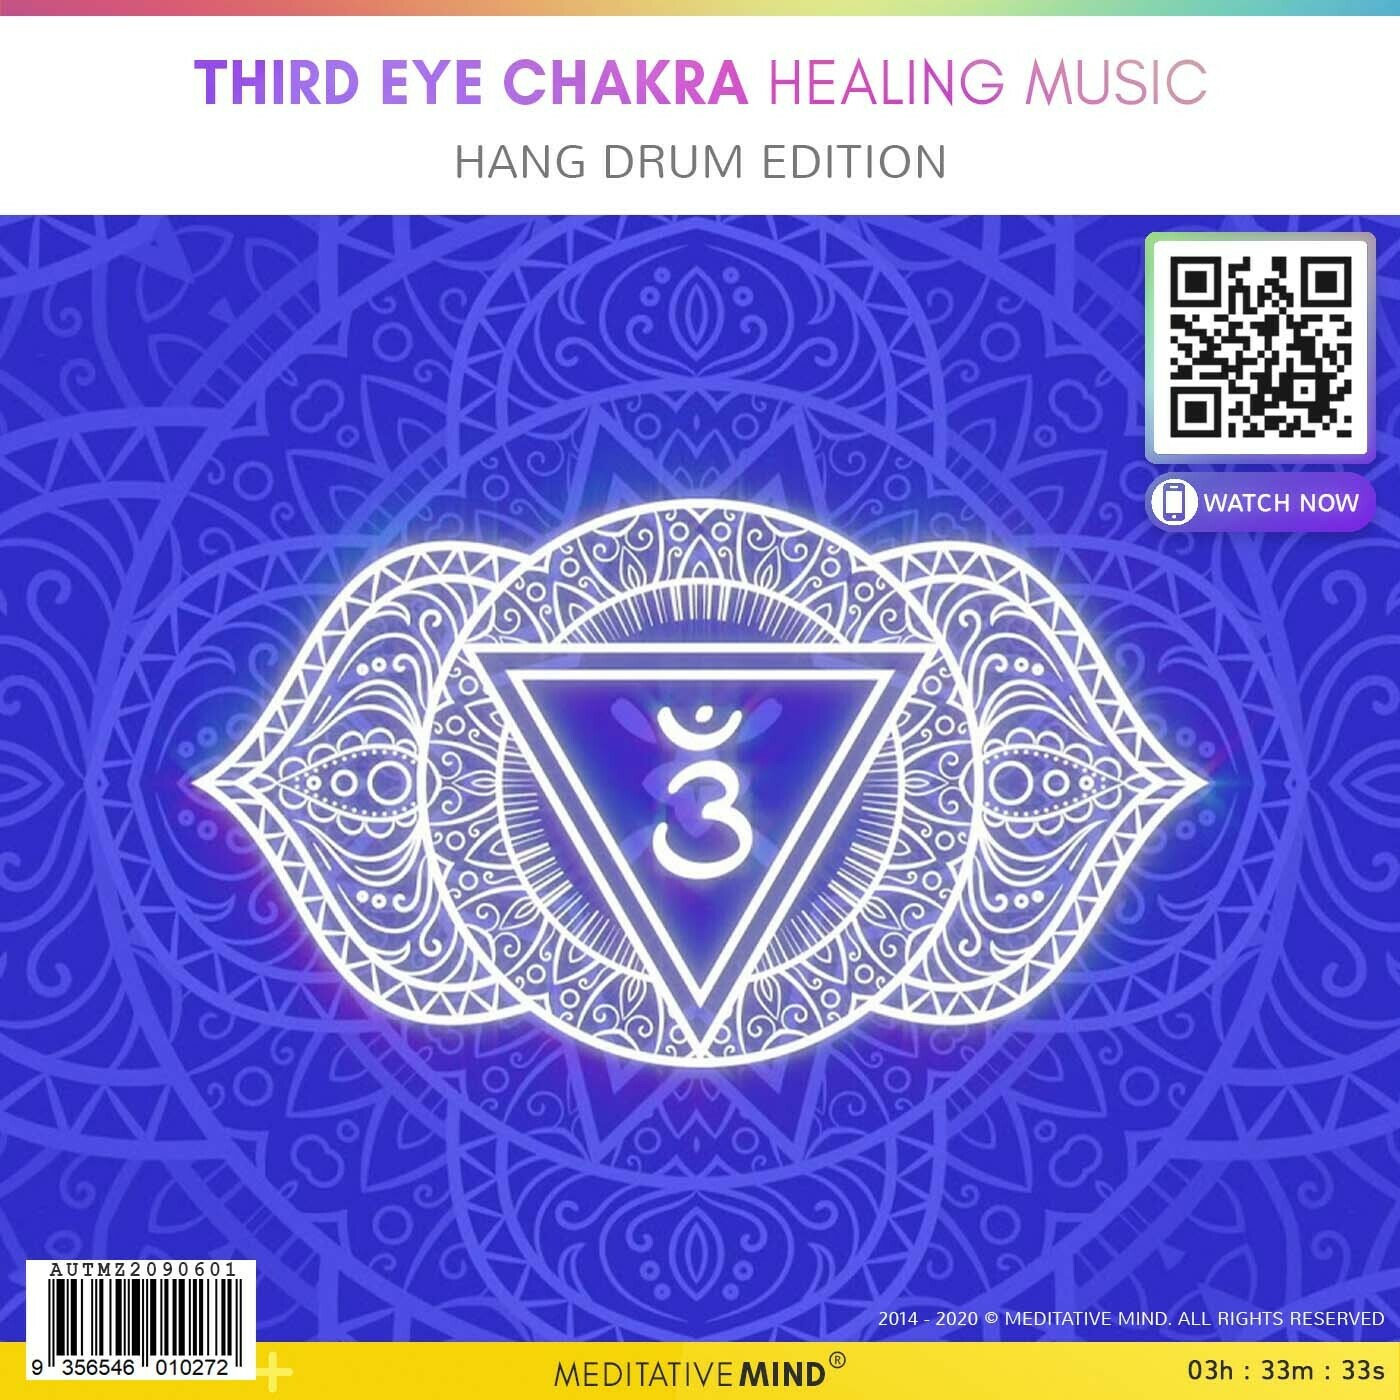 Third Eye Chakra Healing Music - Hang Drum Edition